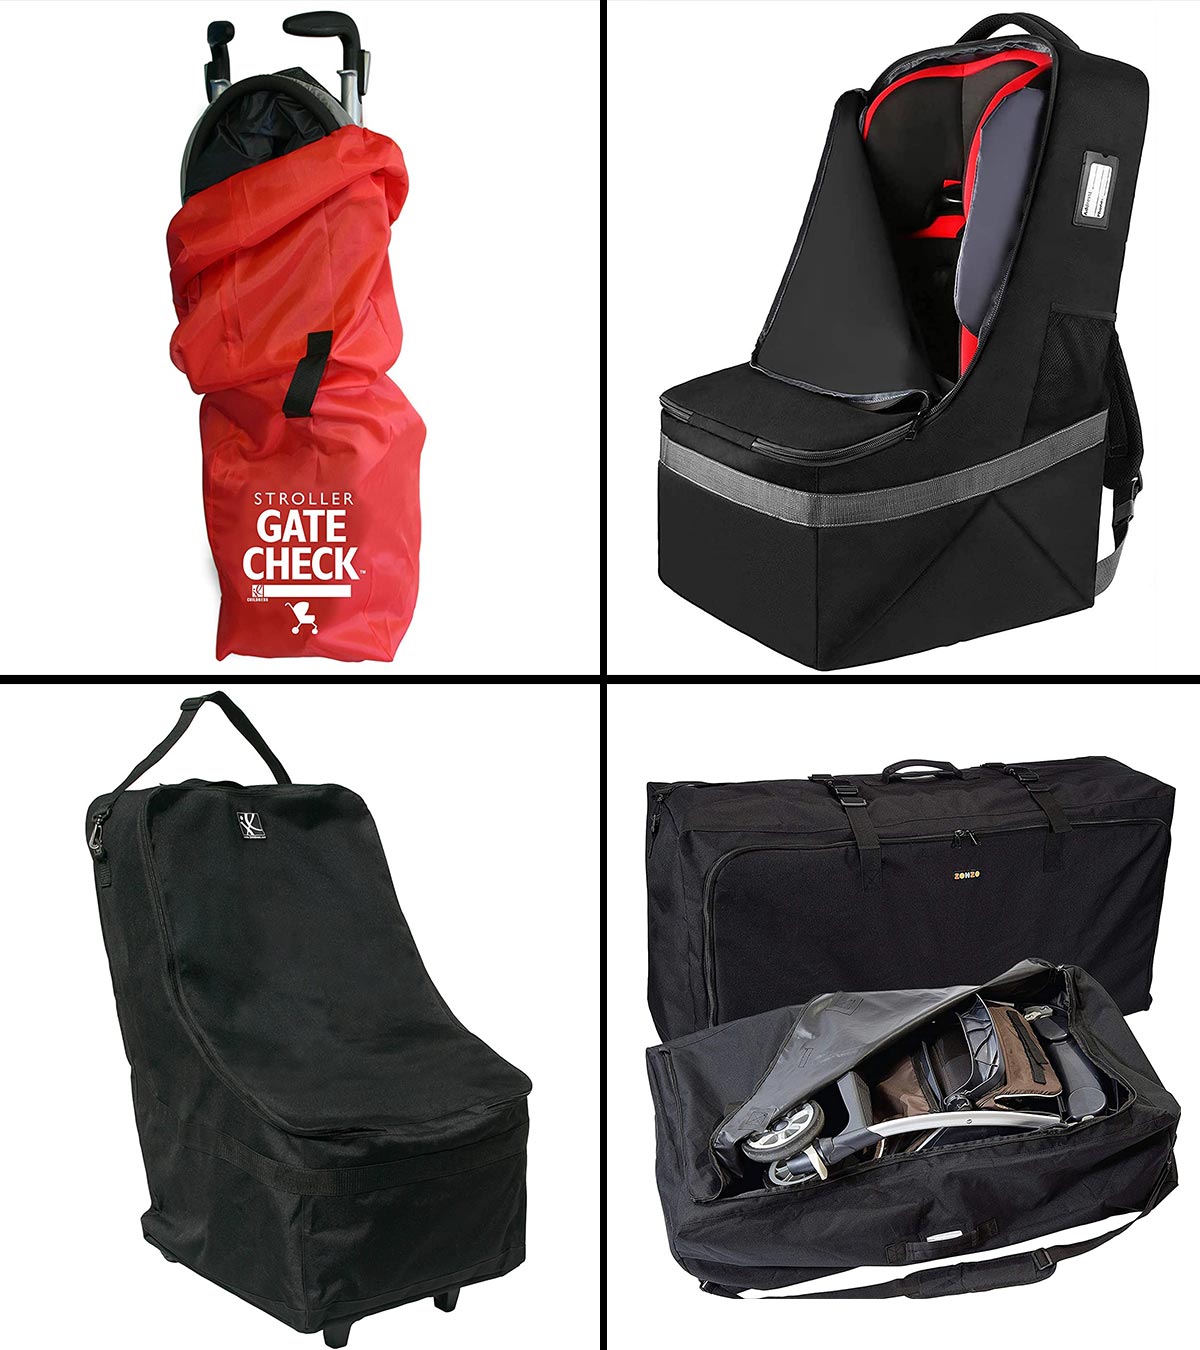 Source Heavy Duty Gate Check Drawstring Backpack Bag Stroller Travel Bag  Airplane Car Seat Travel Bag on m.alibaba.com